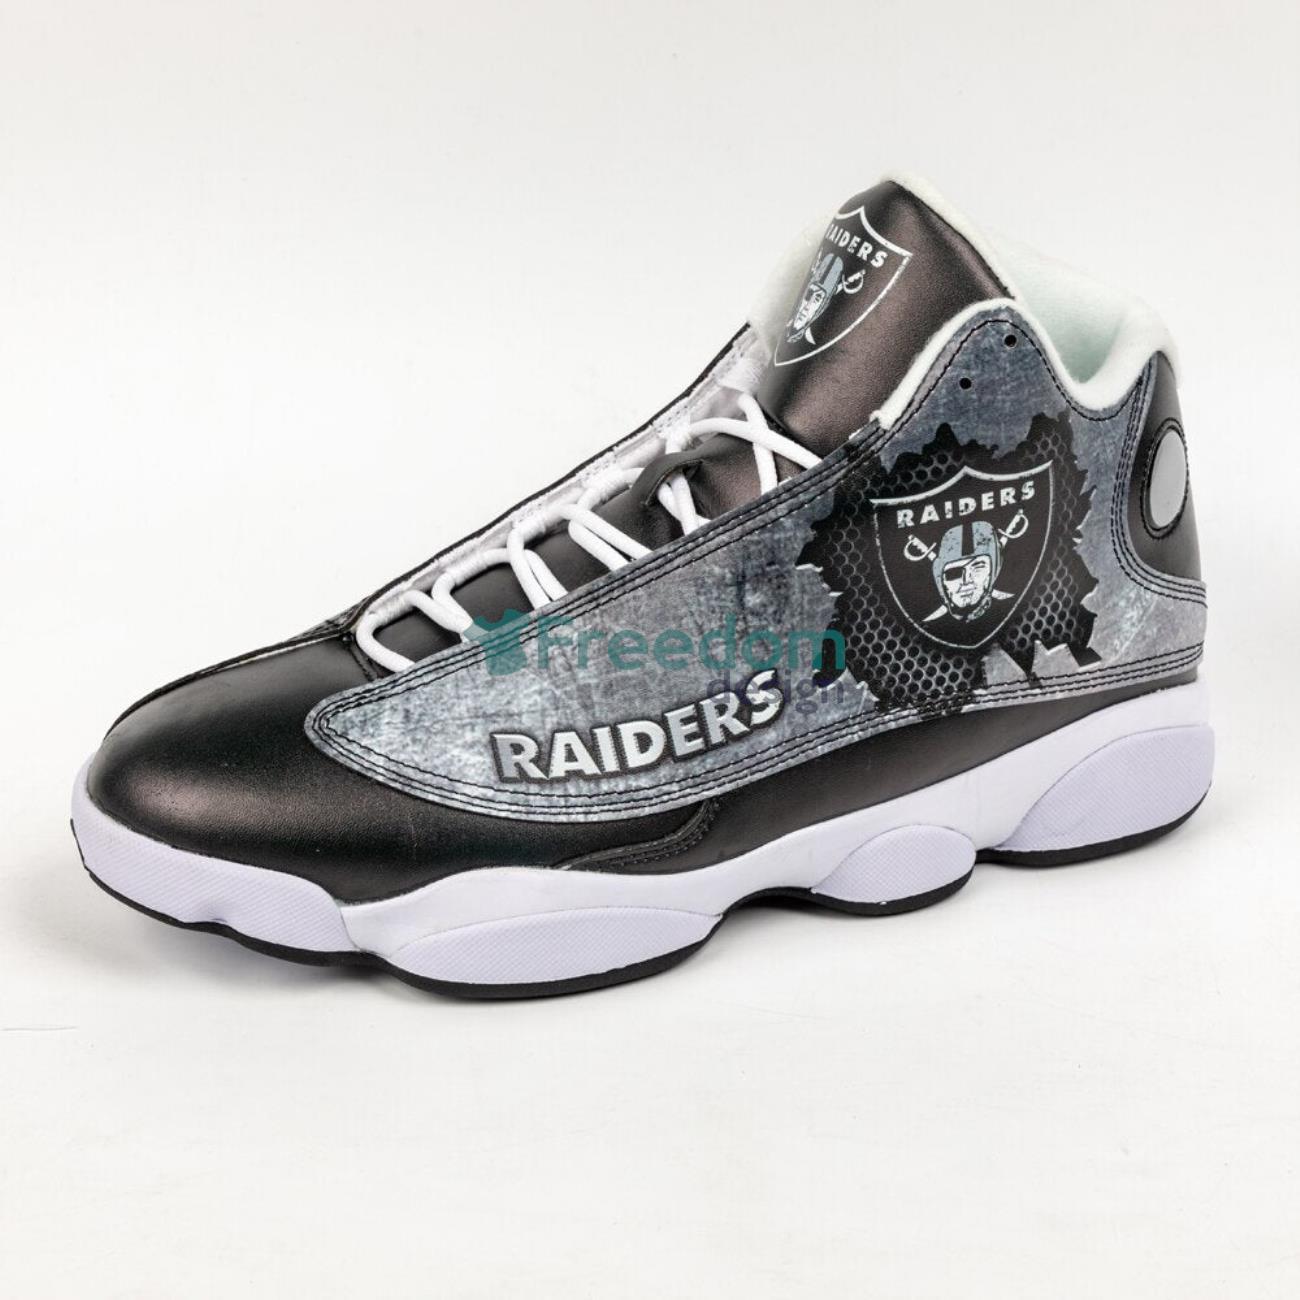 Las Vegas Raiders Team Black Air Jordan 13 Sneaker Shoes For Fans